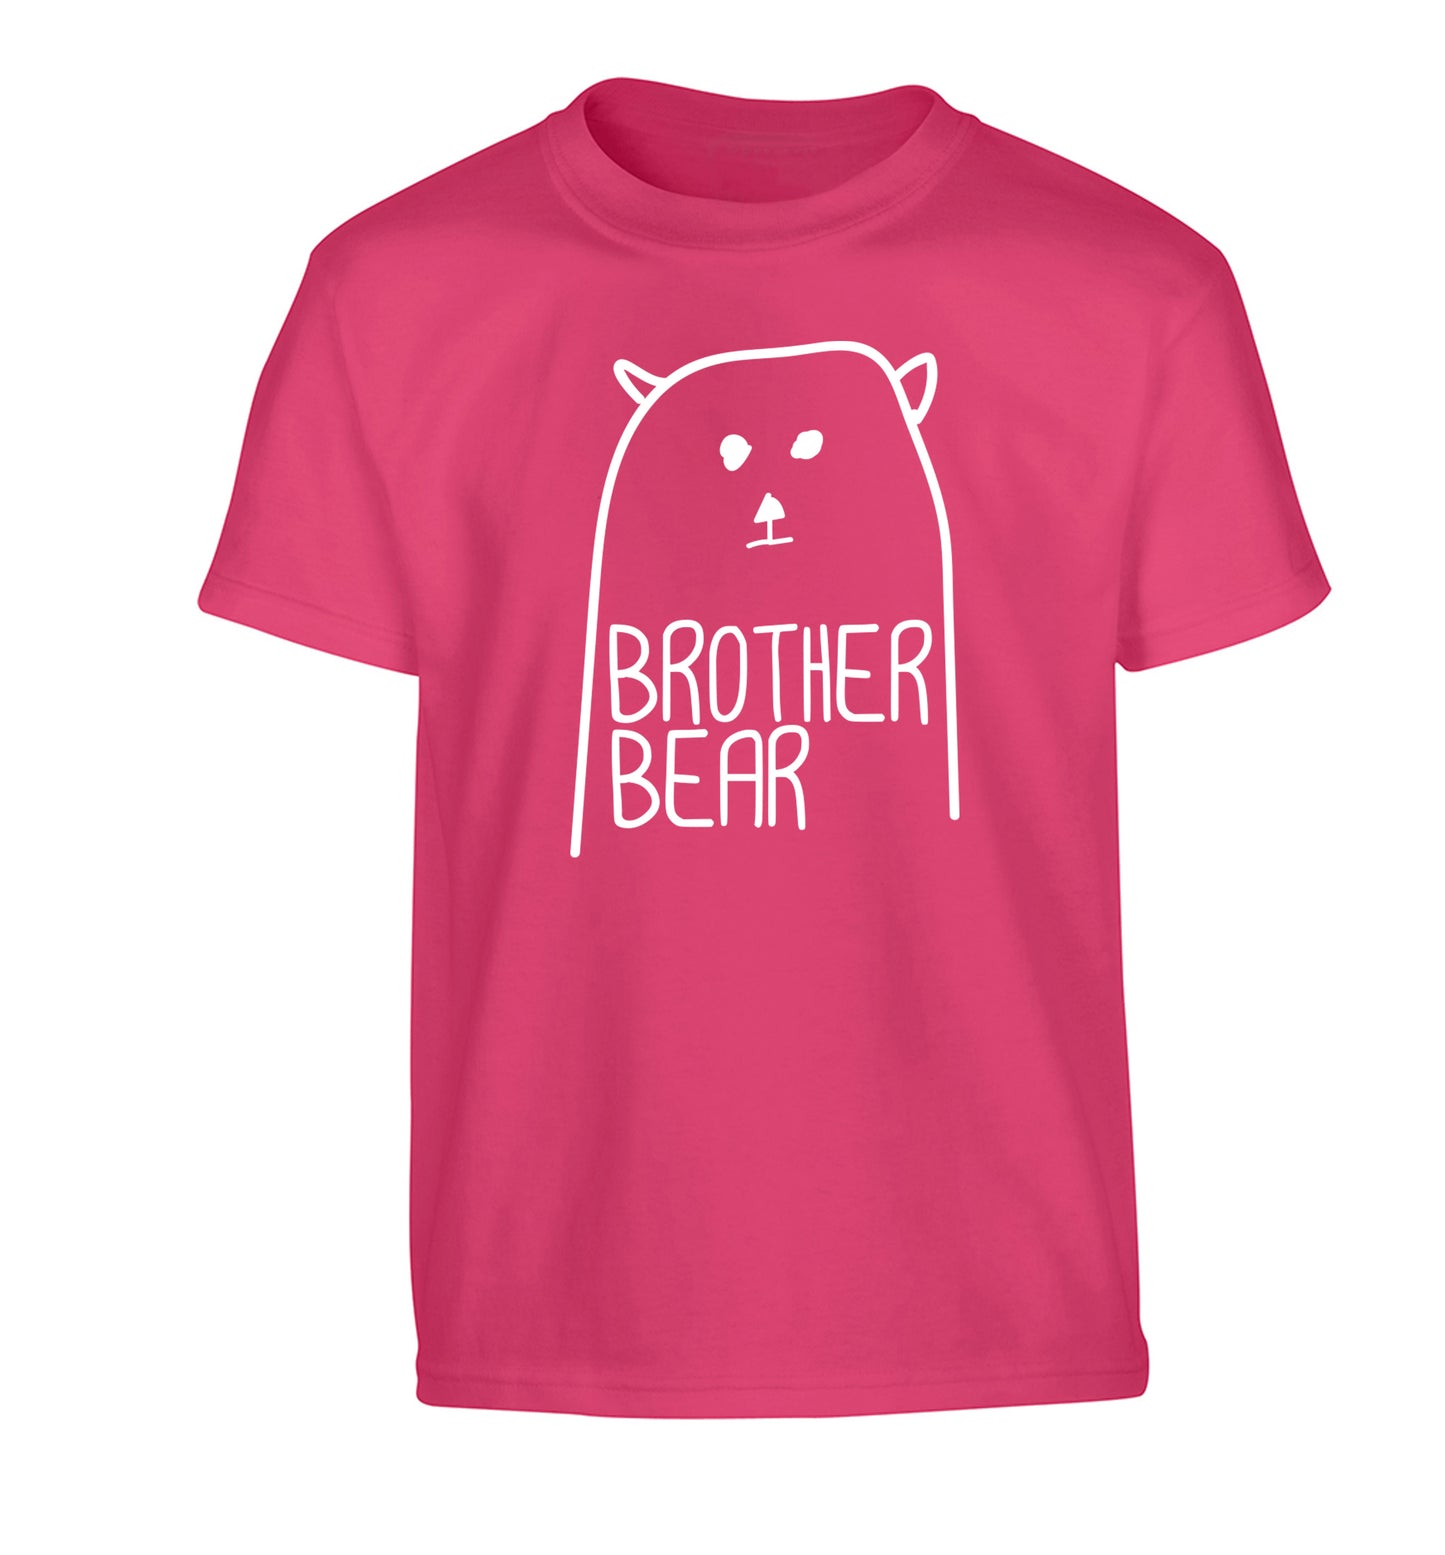 Brother bear Children's pink Tshirt 12-13 Years